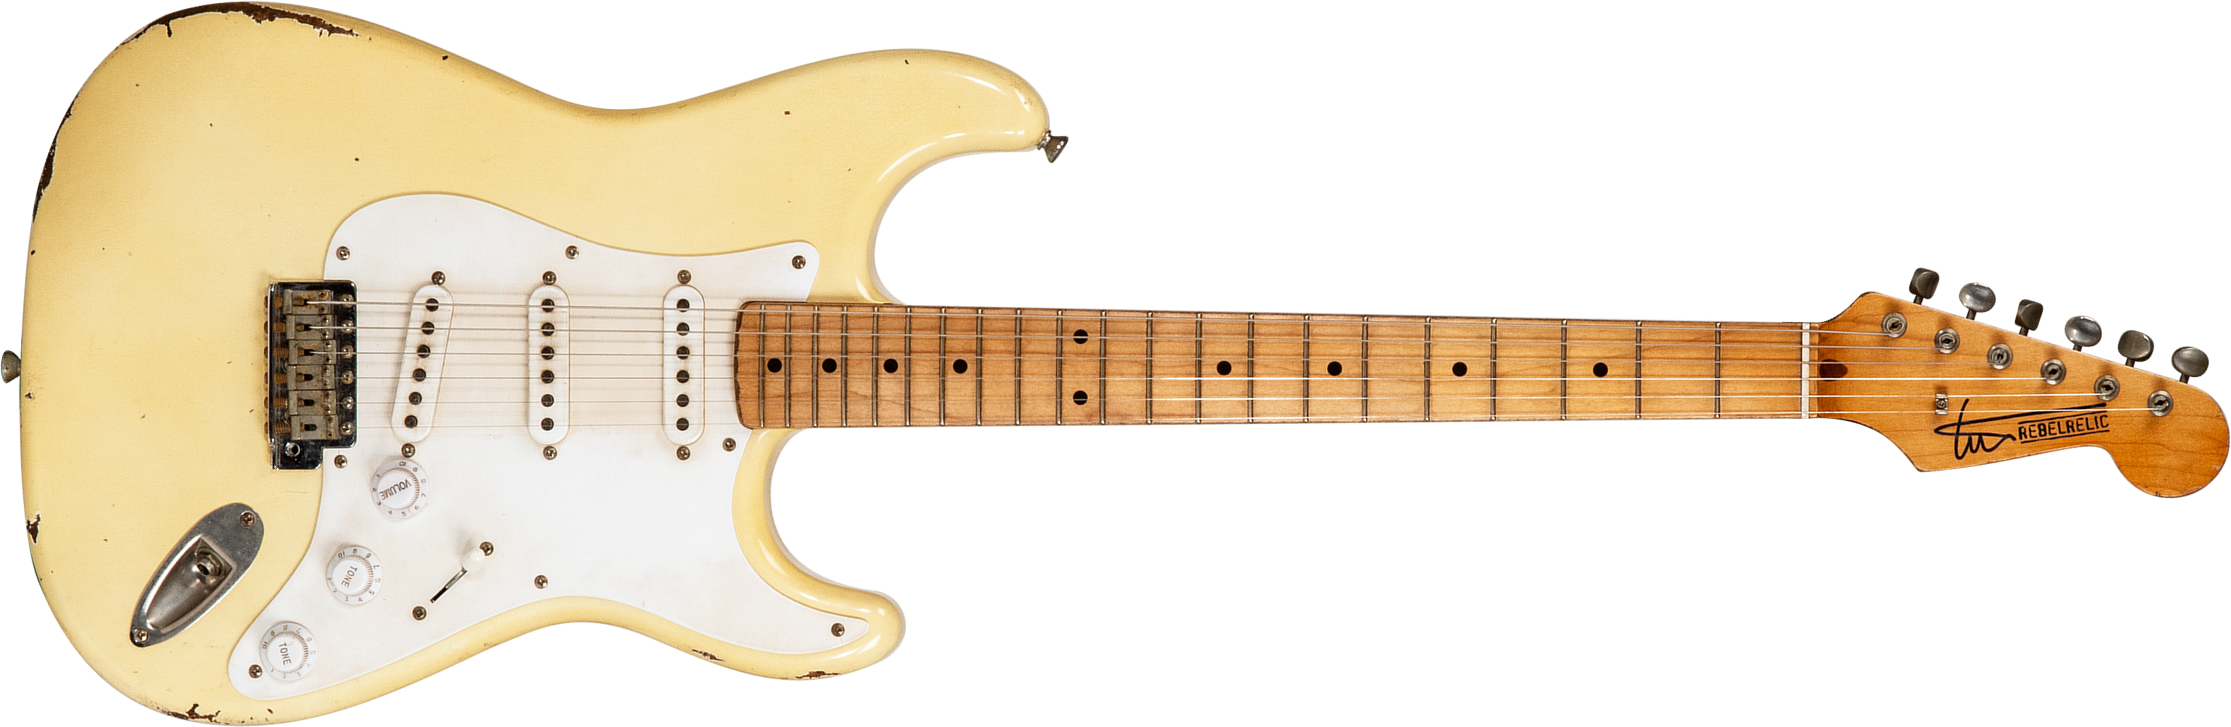 Rebelrelic S-series 55 3s Trem Mn #62191 - Light Aged Banana - Guitare Électrique Forme Str - Main picture